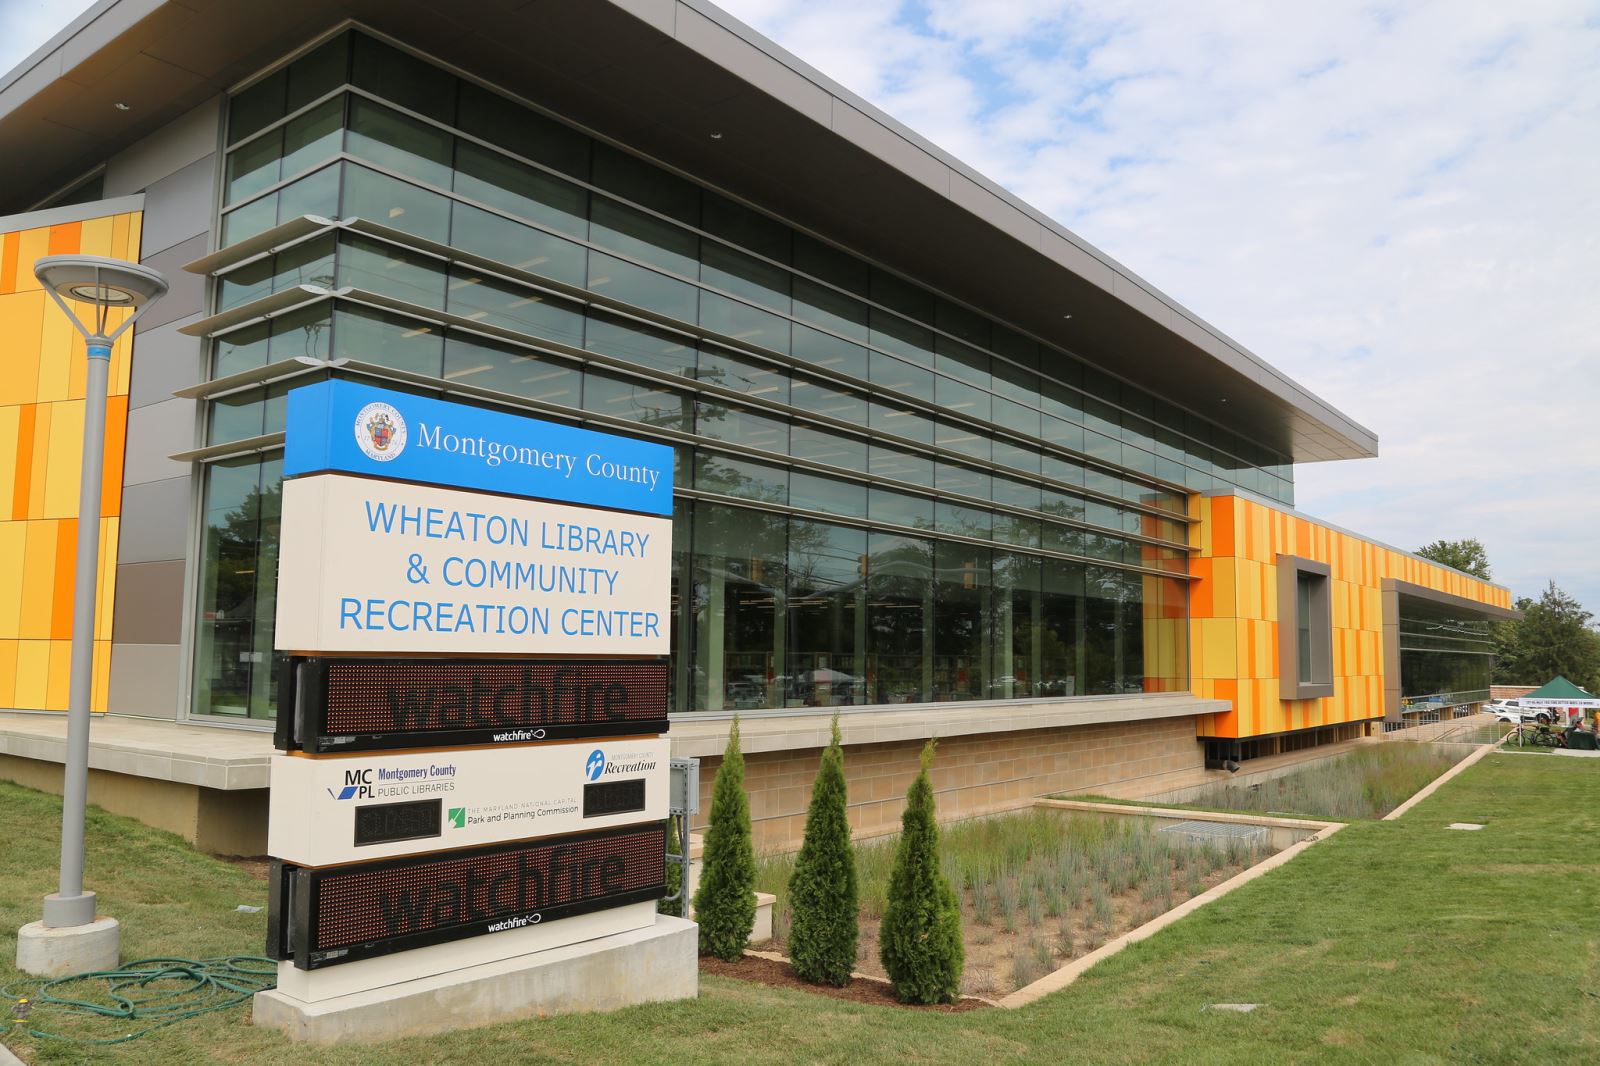 Wheaton Library & Community Recreation Center